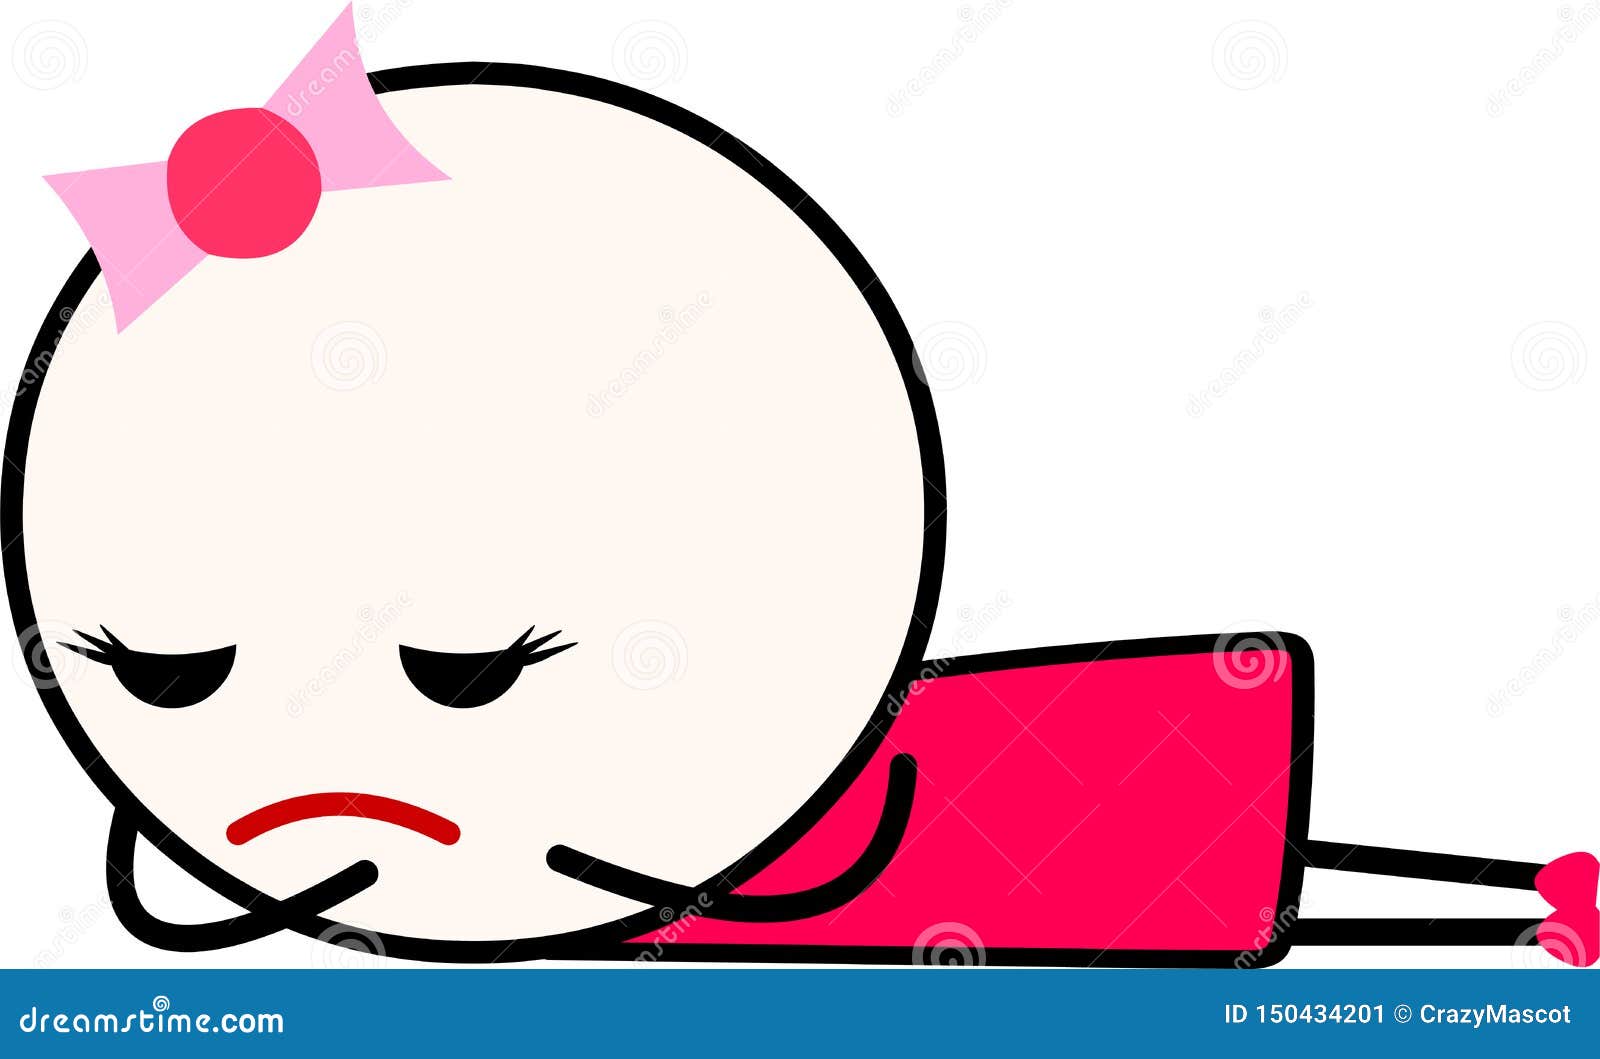 A Sad Cartoon Girl Laying Down Facing Down while Crying. Stock ...